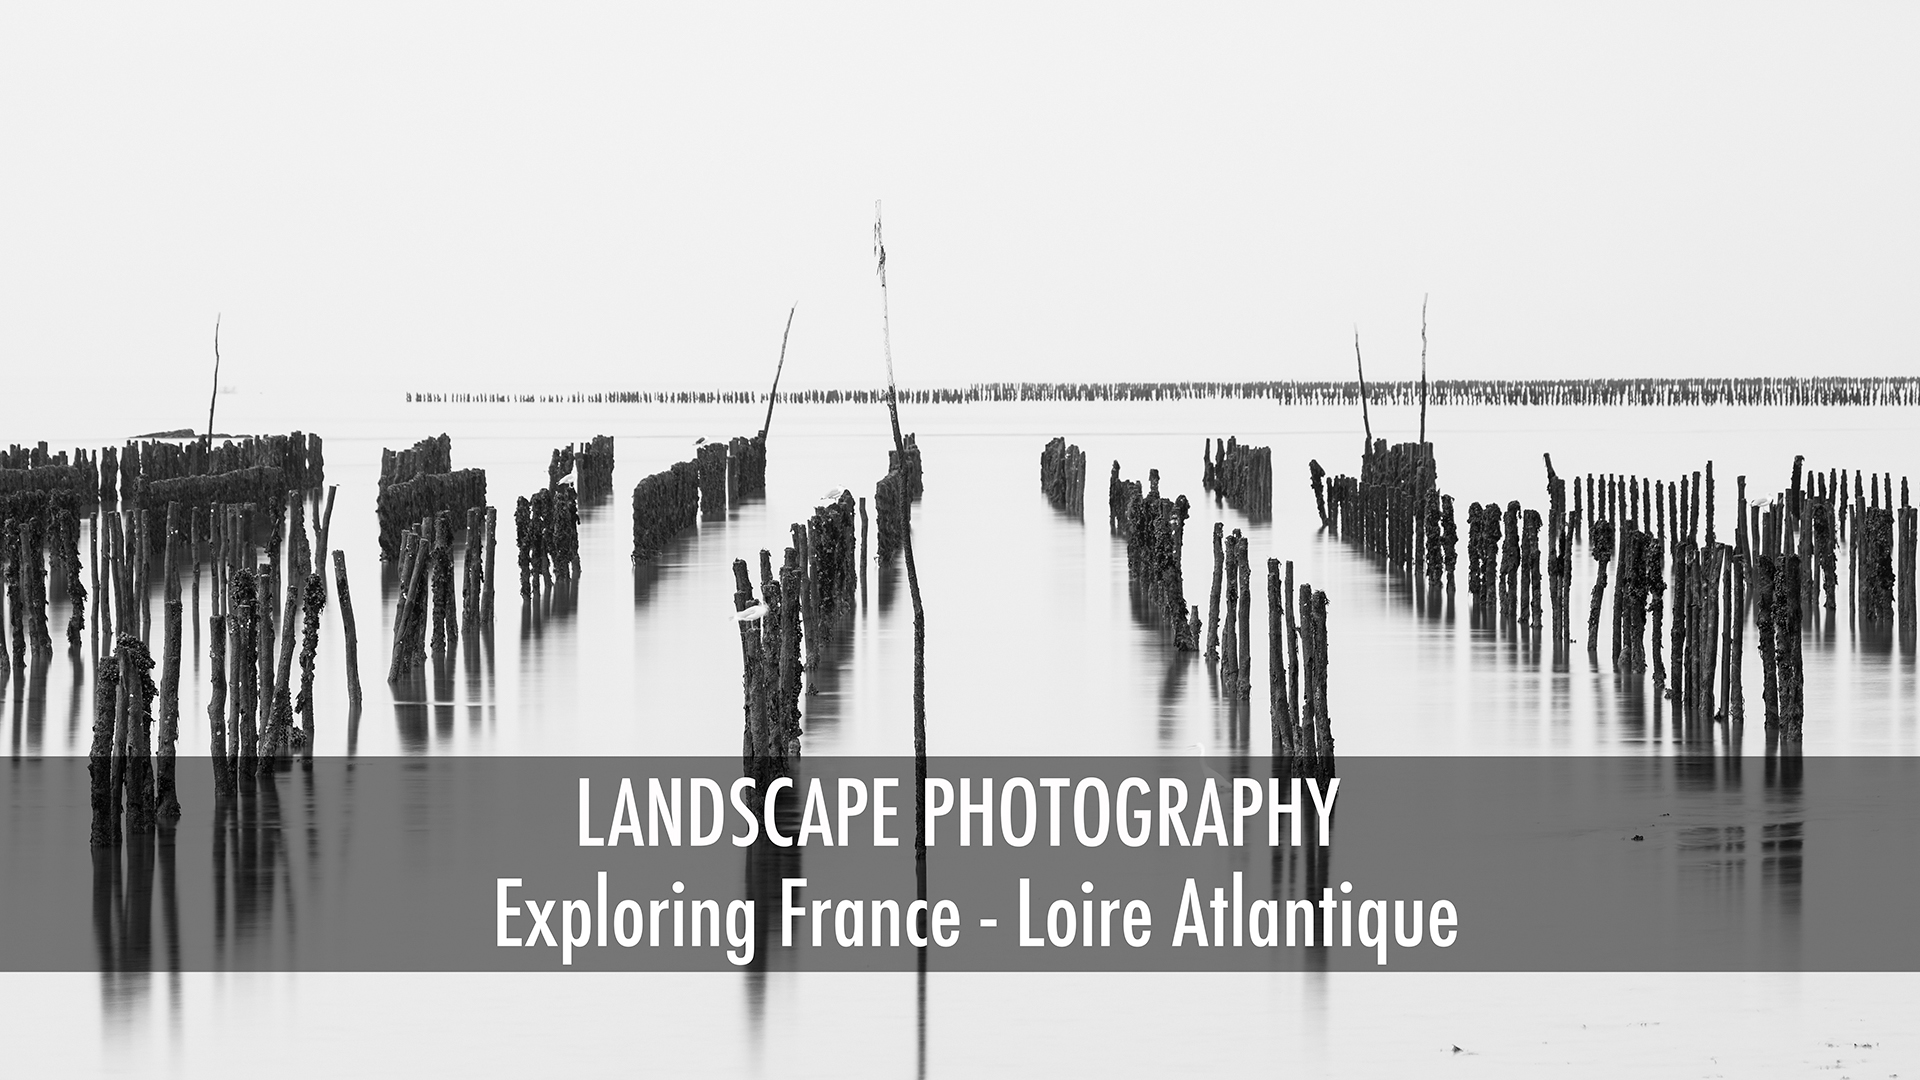 Exploring France in the department of Loire Atlantique. Landscape photography.